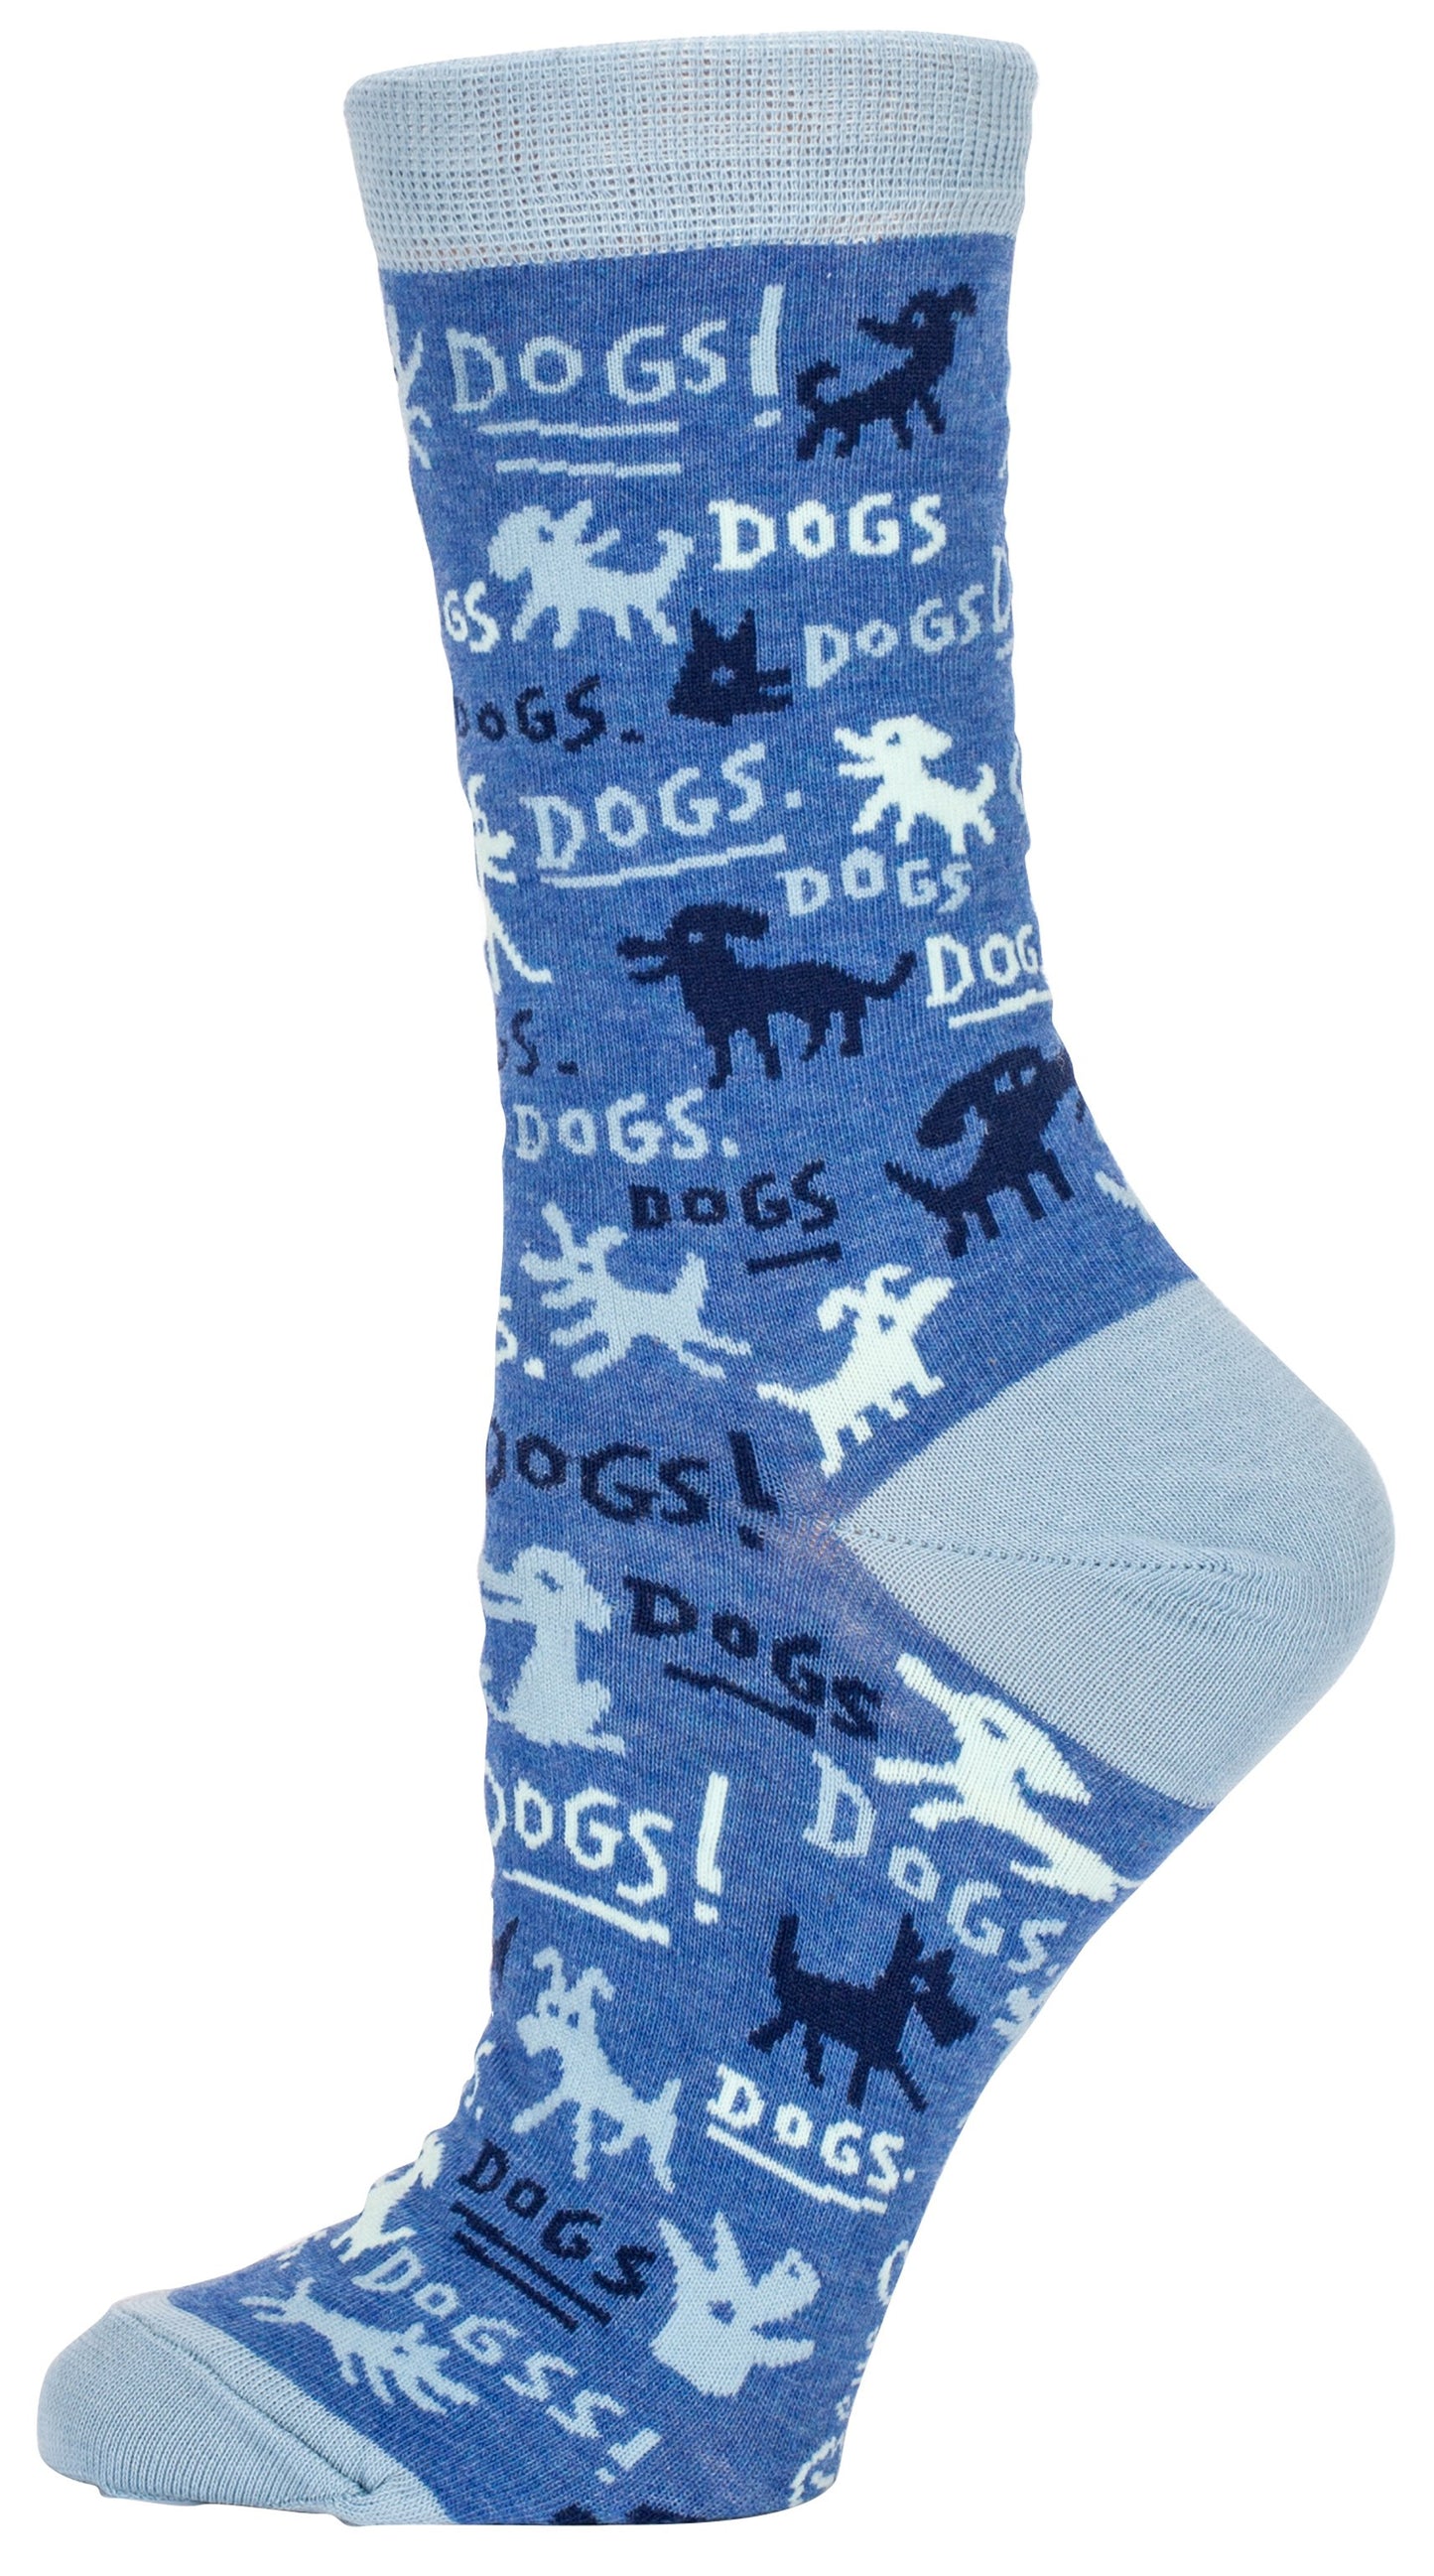 Blue Q - Women's Crew Socks - Dogs!